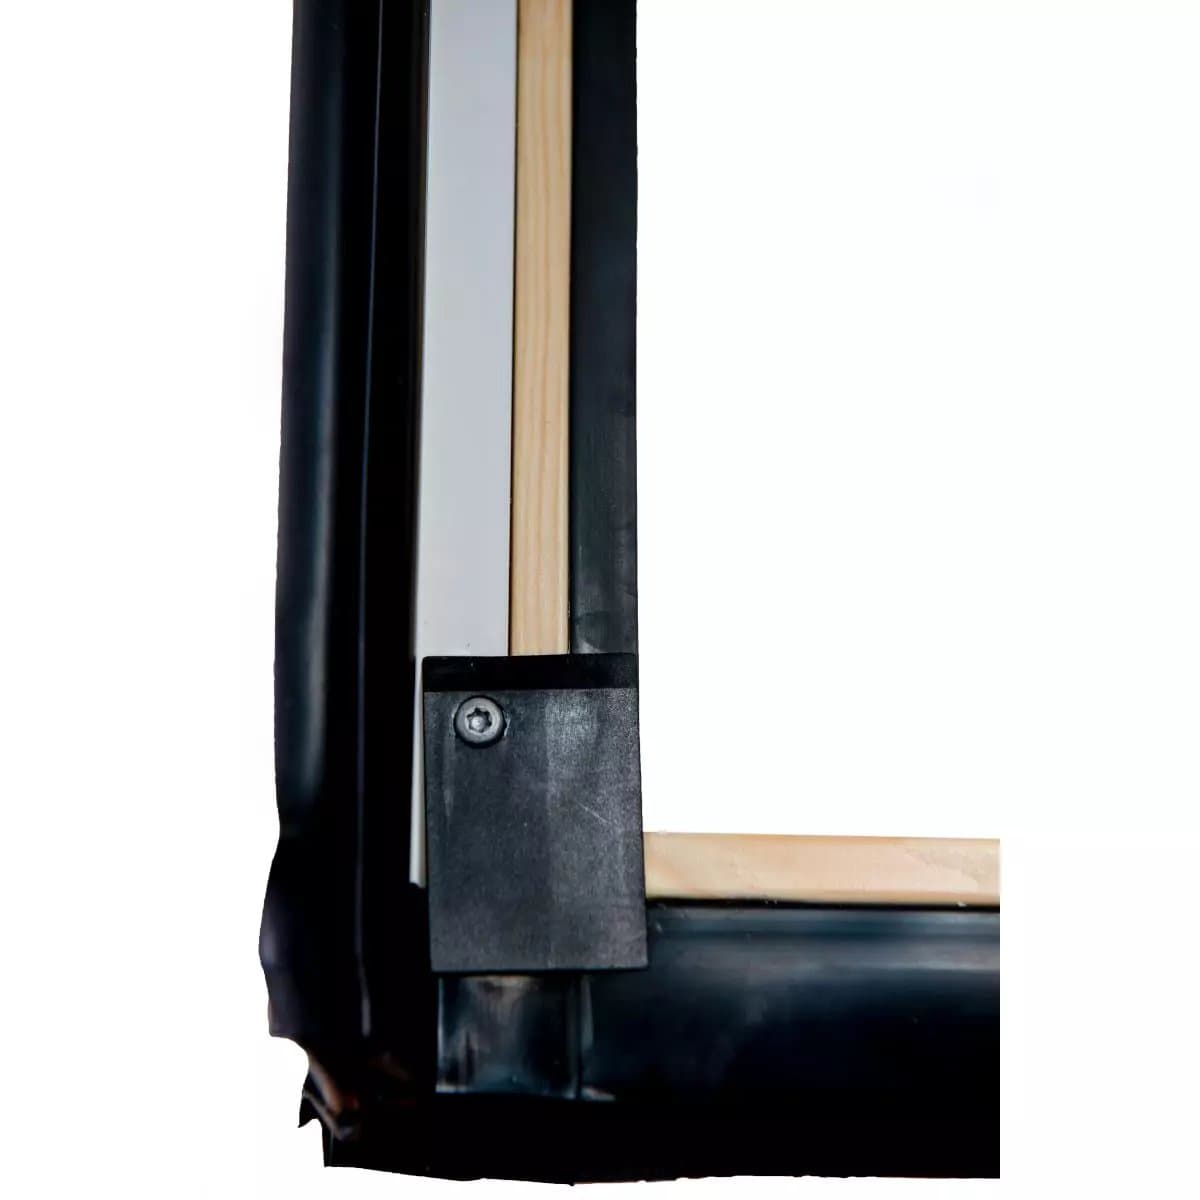 Окно мансардное деревянное Designo R49 H200. 2 камерное. Ручка снизу. ThermoBlock WD.